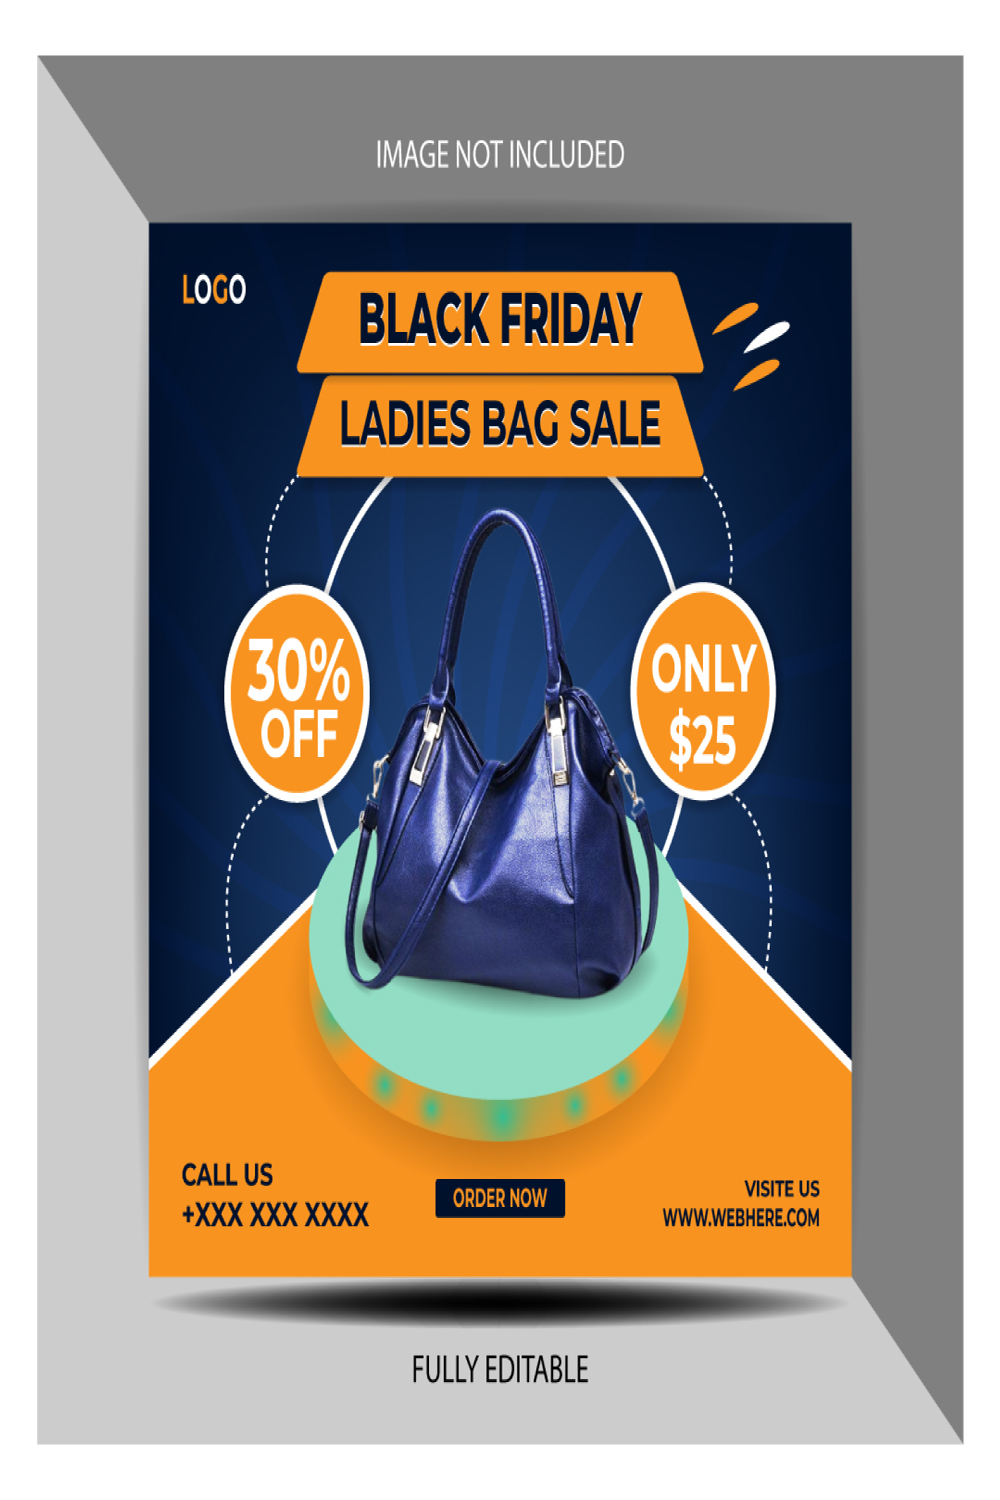 4 Black Friday Woman bags social media post template Bundle pinterest preview image.